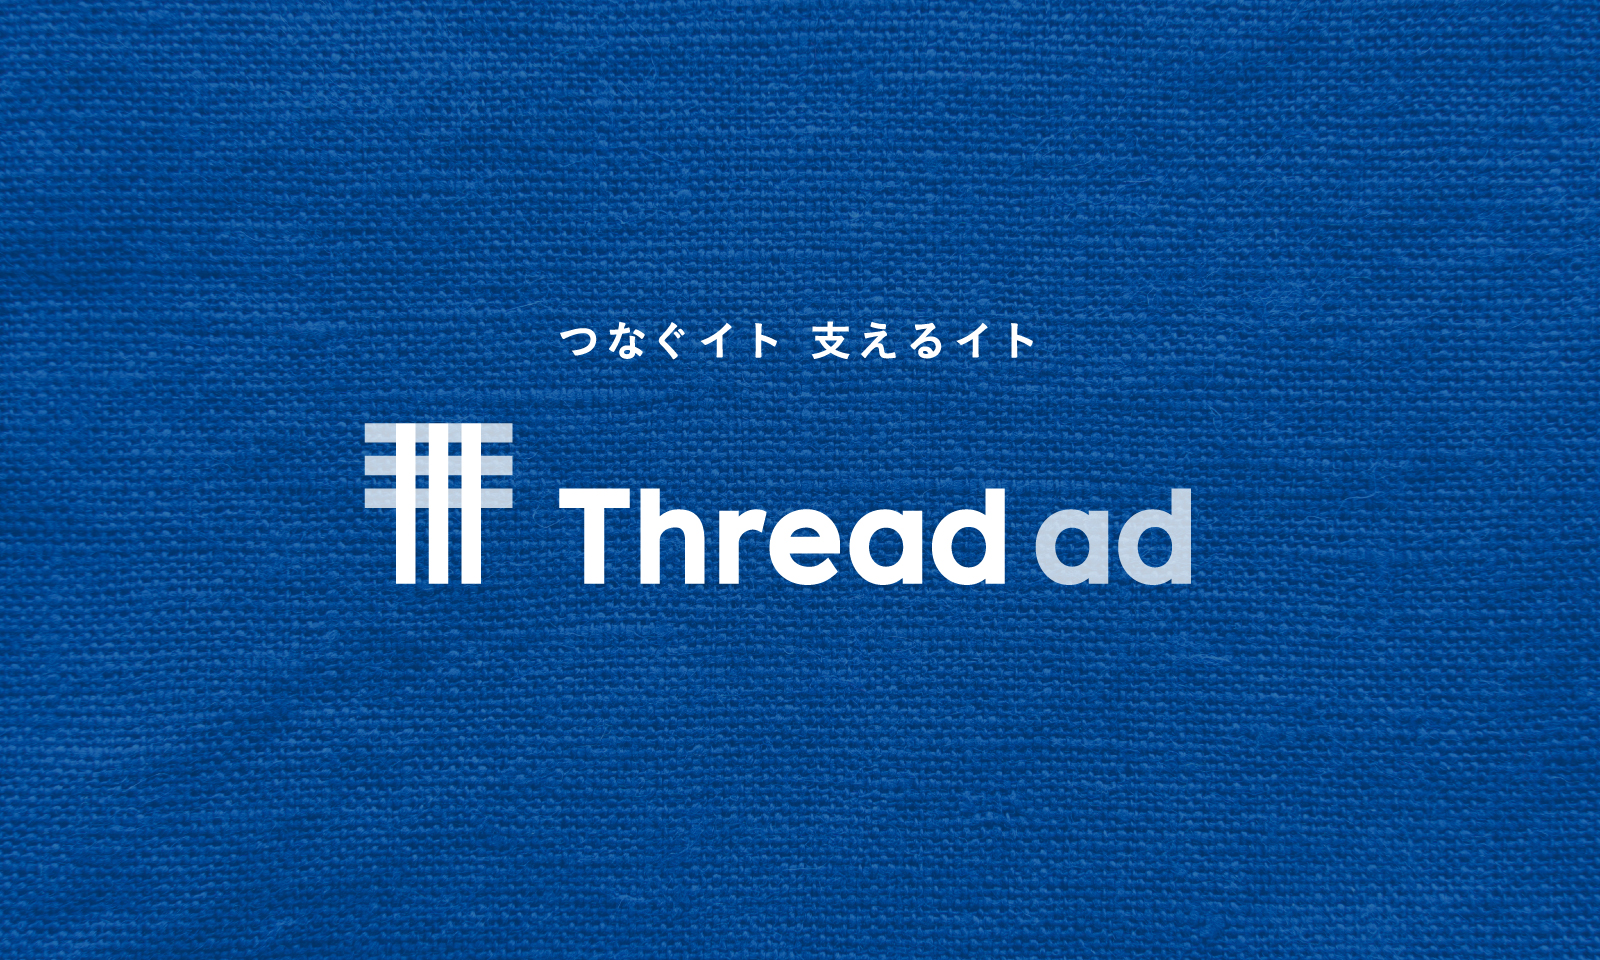 Thread ad